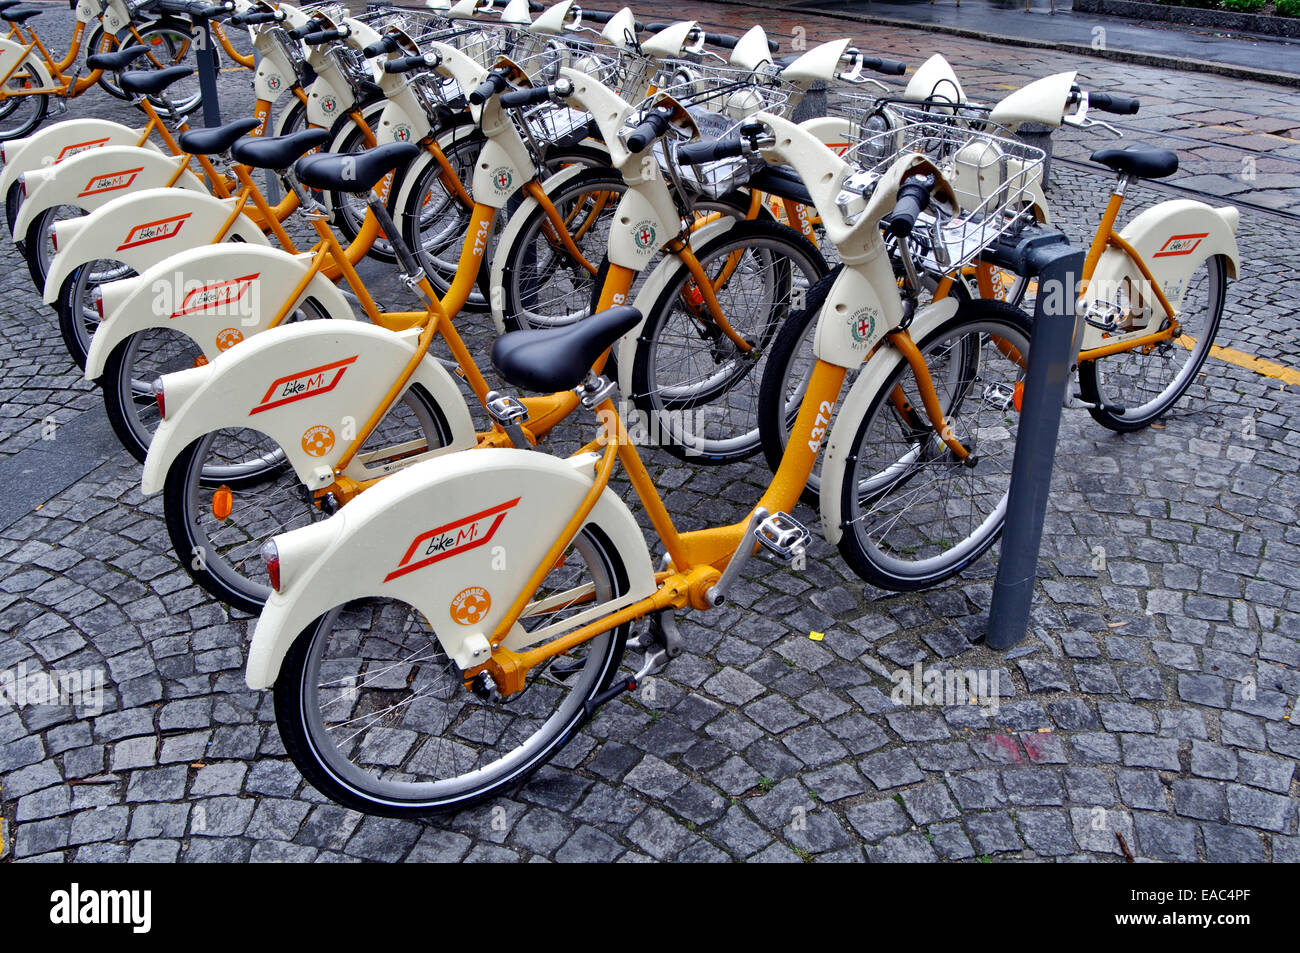 Italien, Lombardei, Mailand, Bike-Sharing, Tiefgarage Fahrräder  Stockfotografie - Alamy